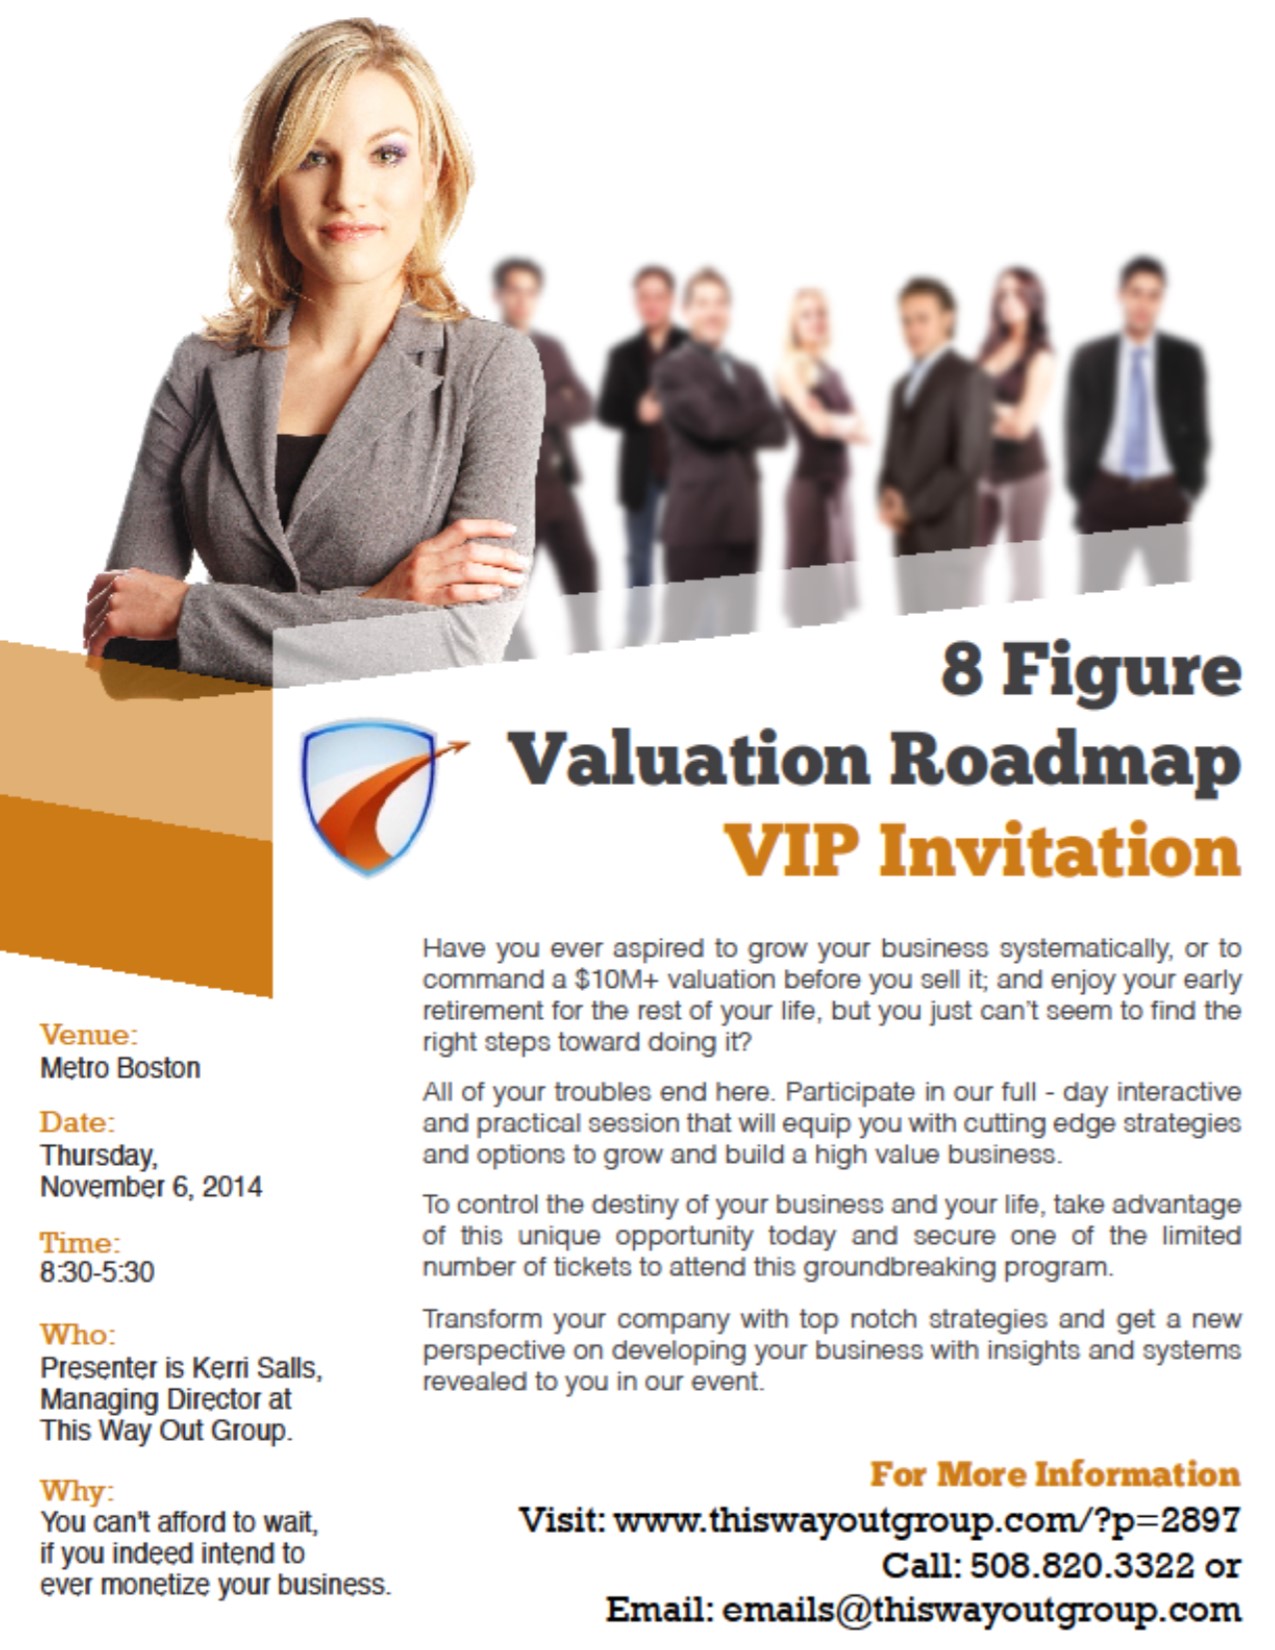 8 Figure Valuation Roadmap - VIP Invitation